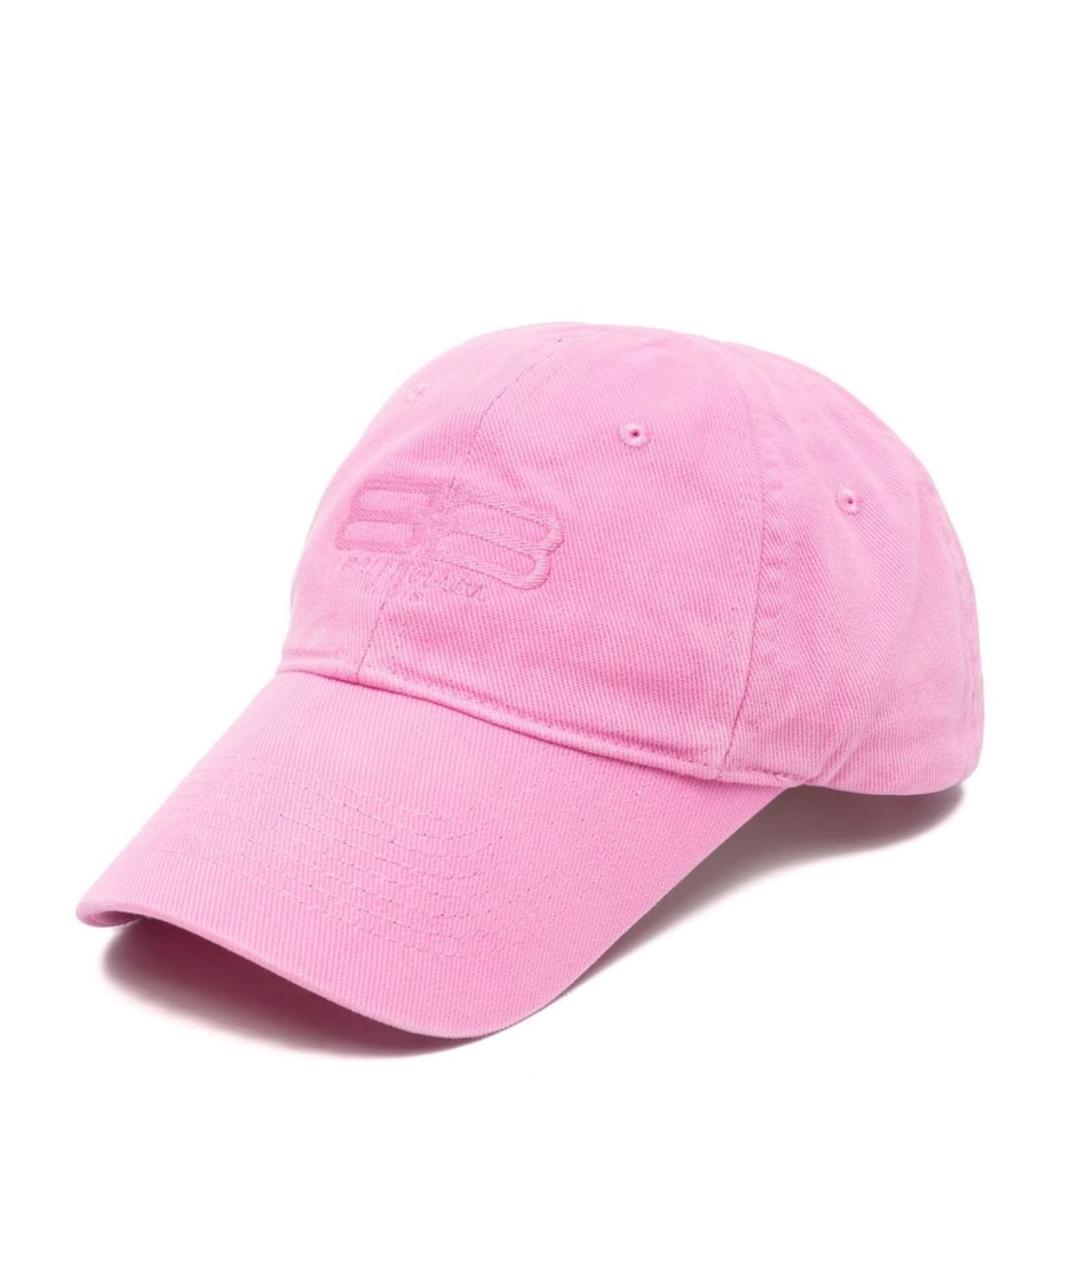 BALENCIAGA Розовая хлопковая кепка, фото 1